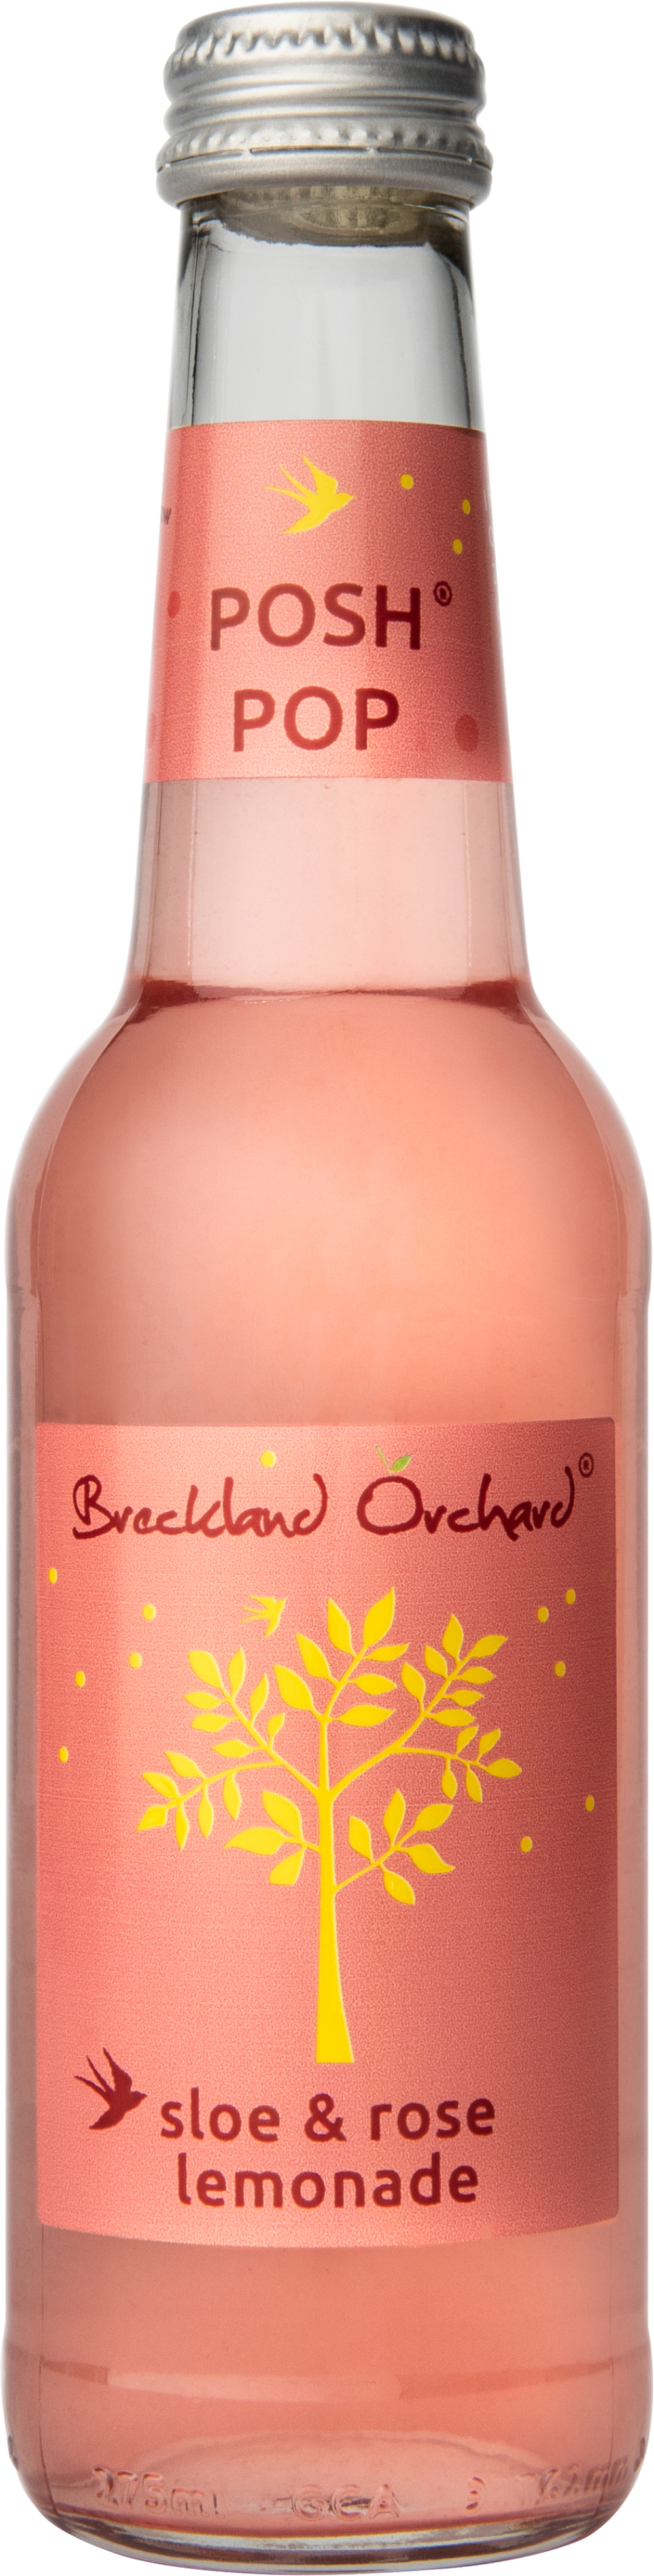 BRECKLAND ORCHARD Posh Pop - Sloe & Rose Lemonade 275ml